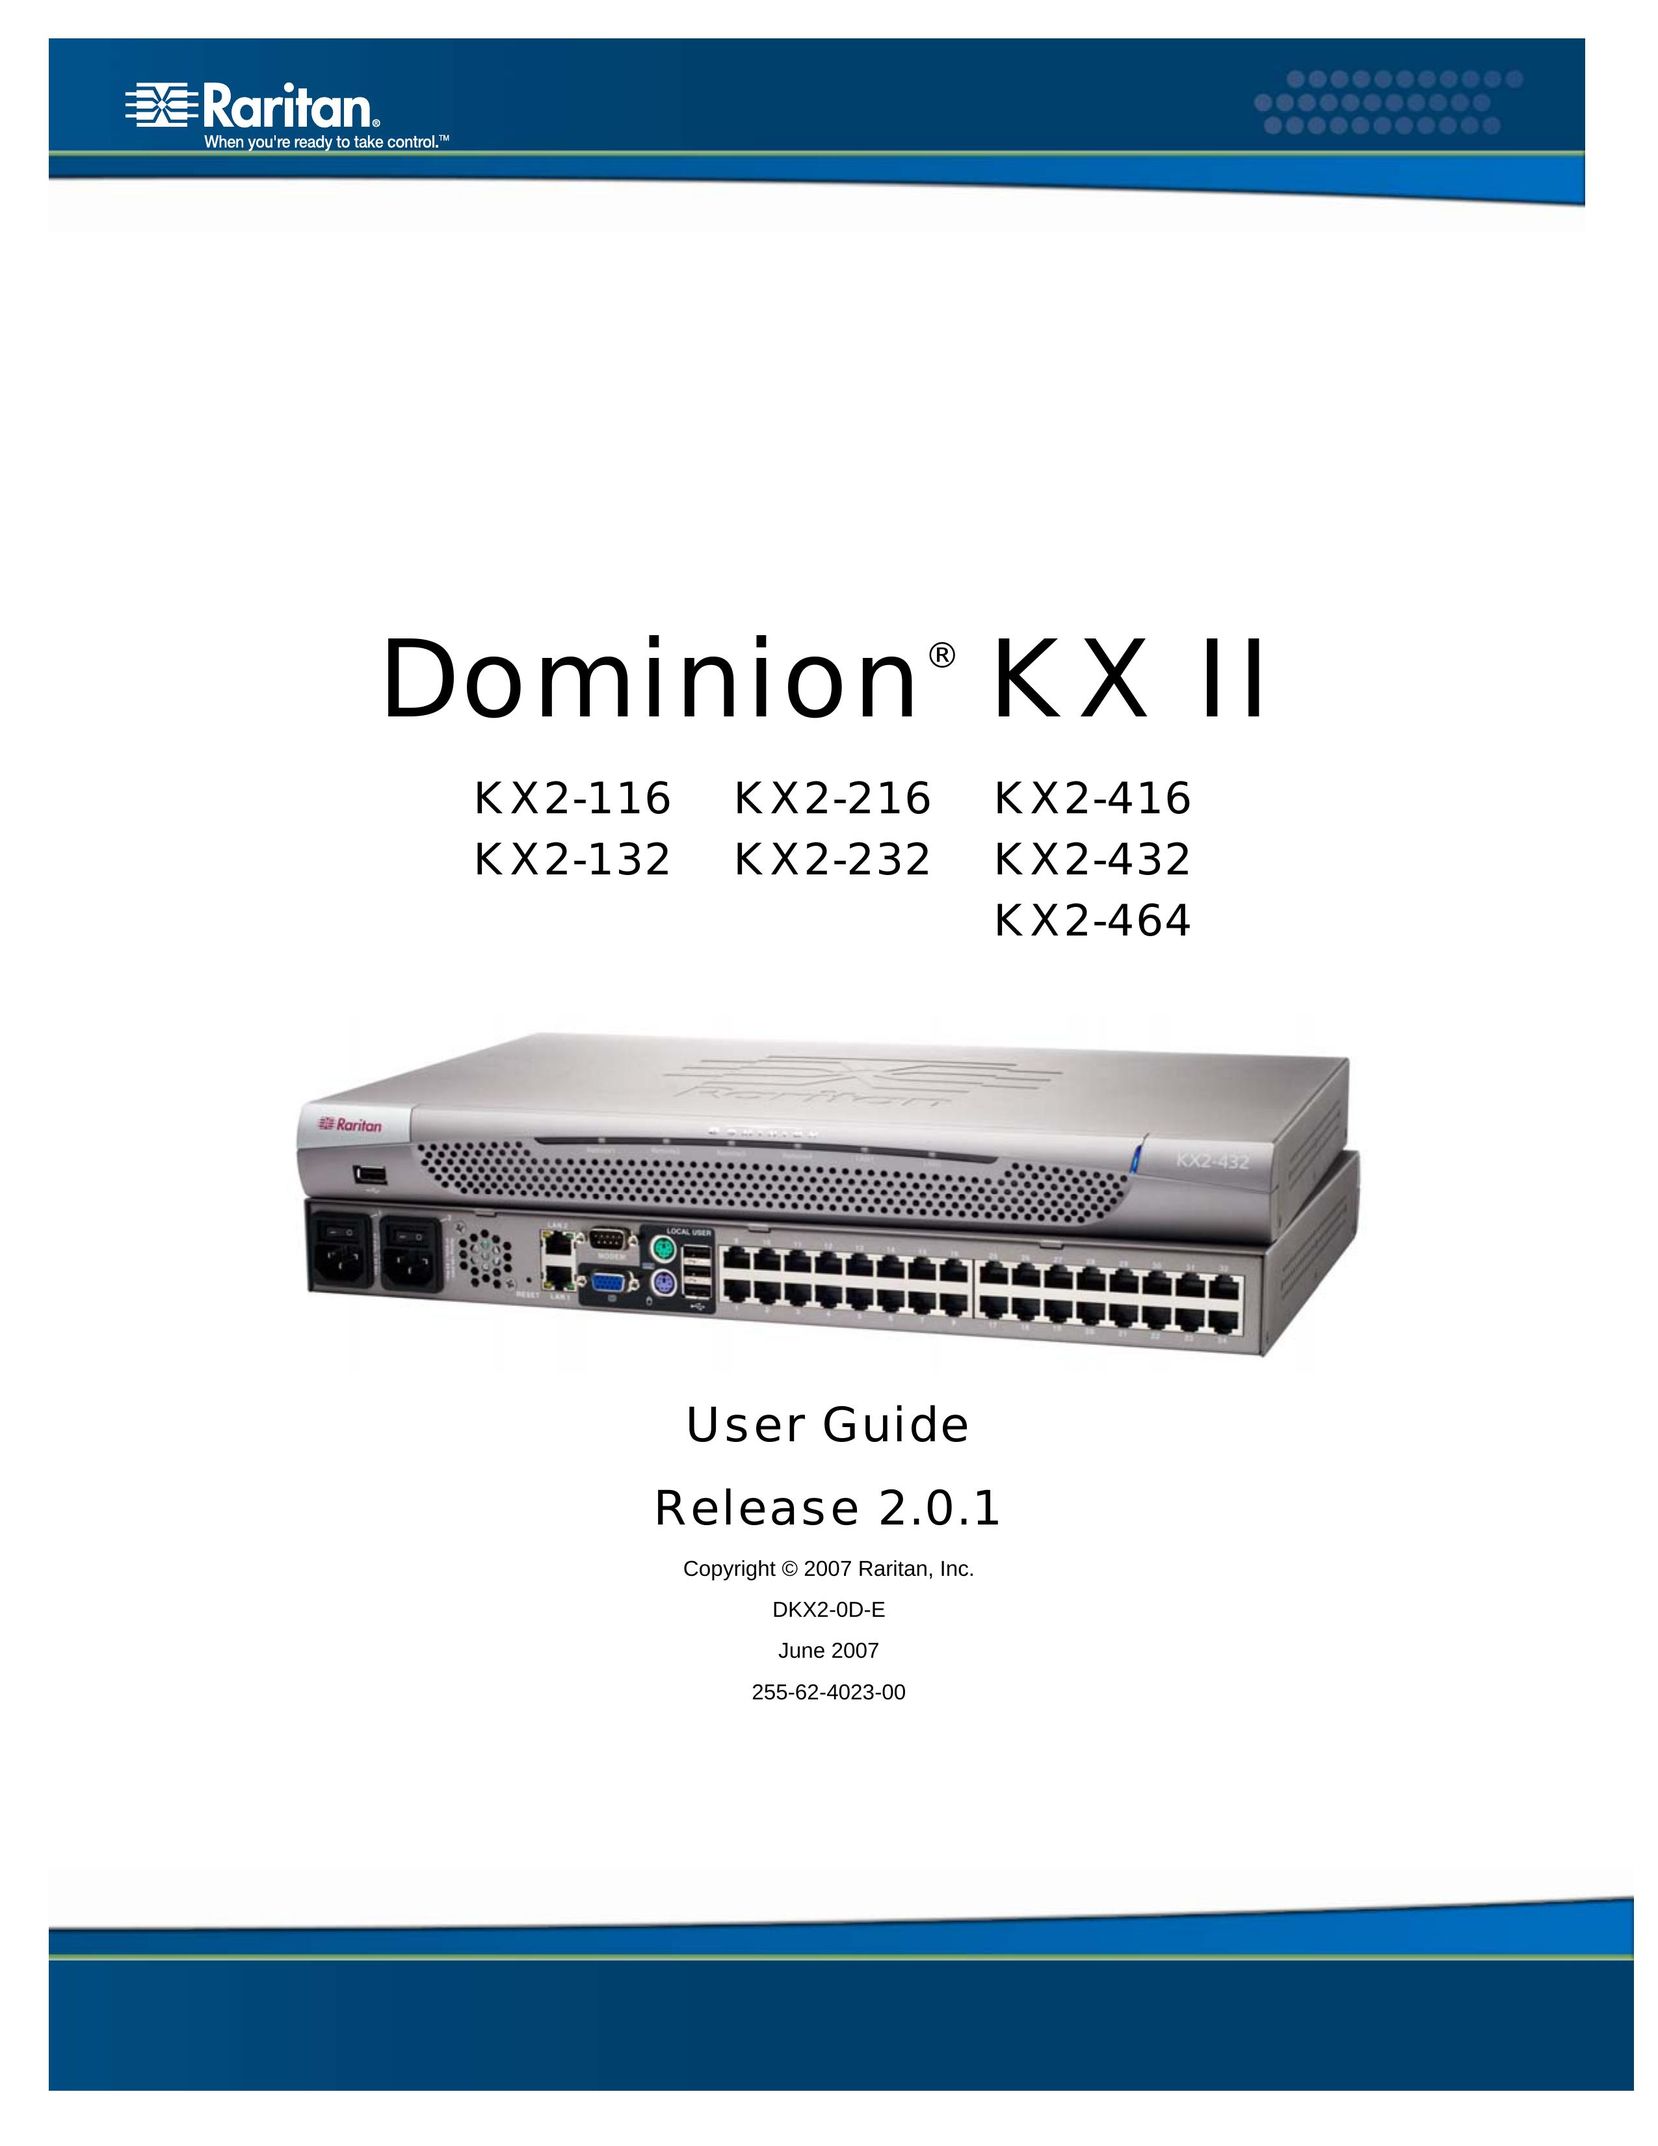 Raritan Computer KX2-416 Network Router User Manual